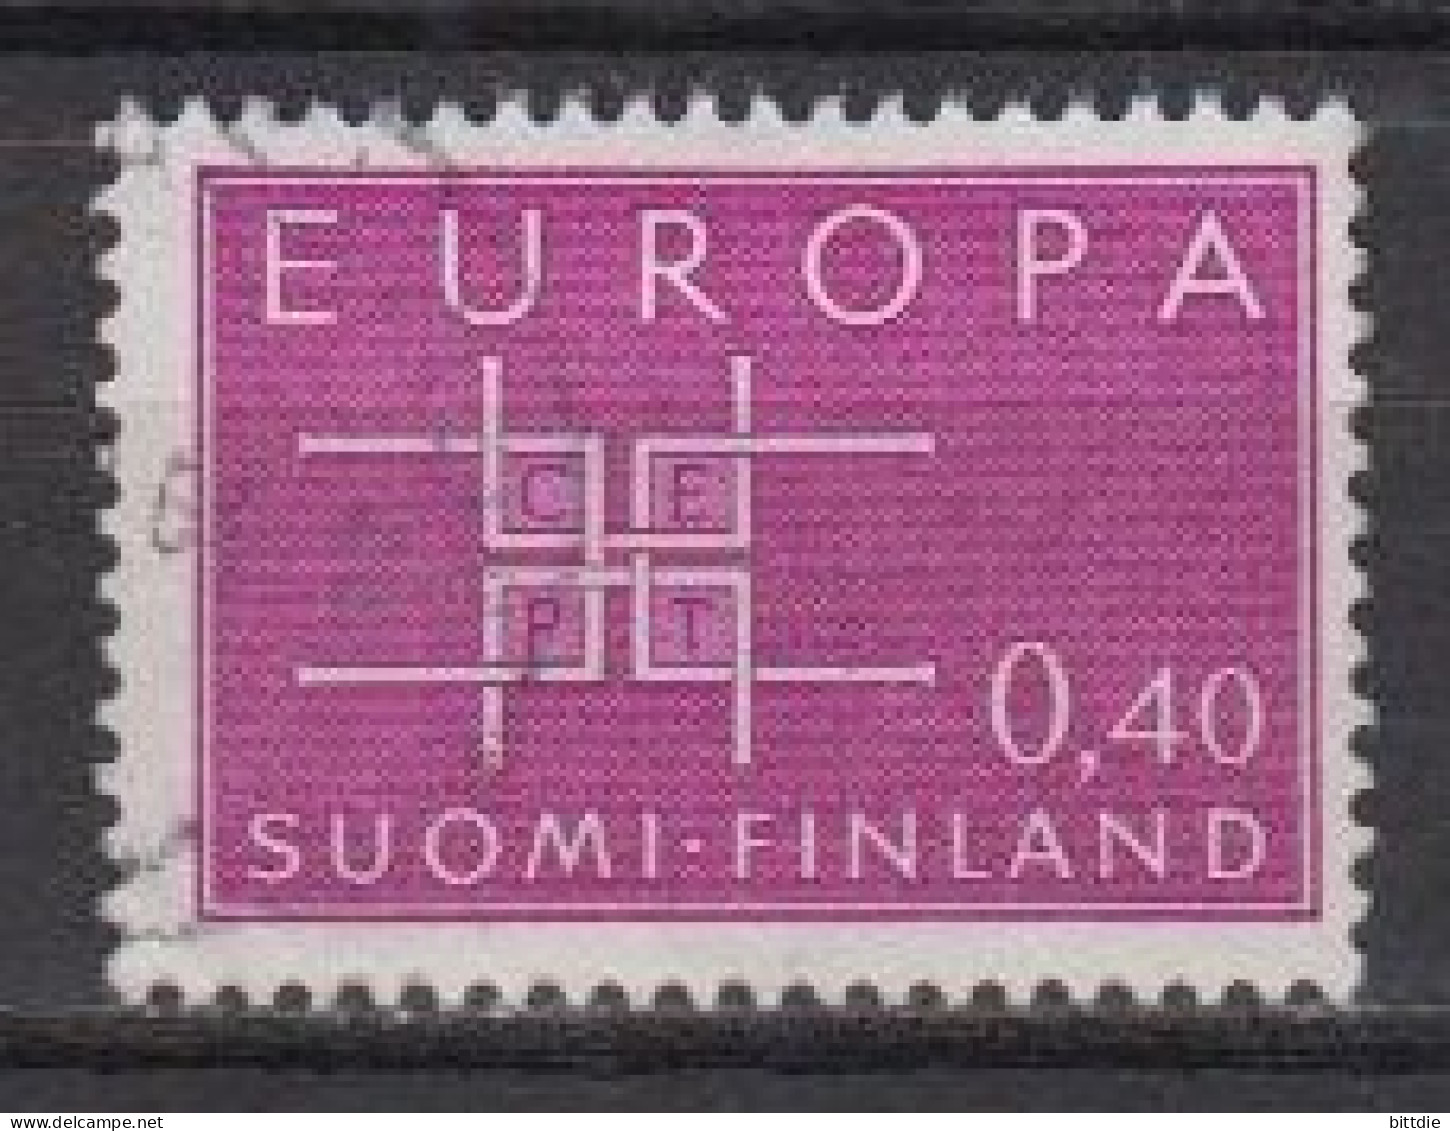 Europa/Cept, Finnland  576 , O  (K 2648) - 1963